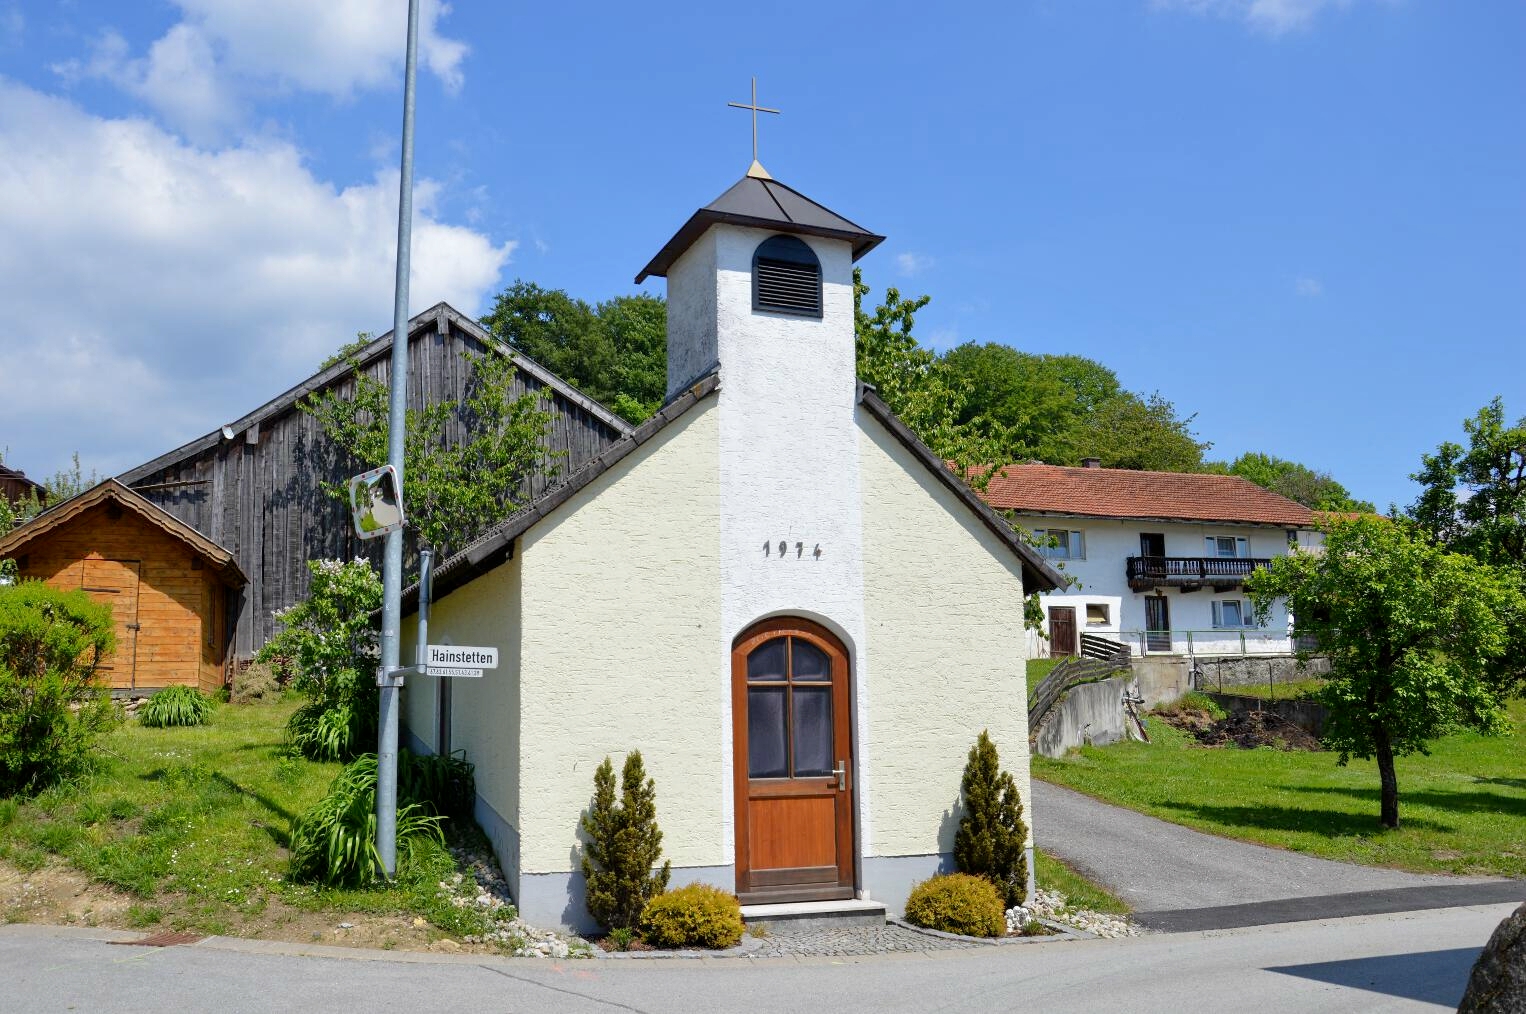 Kapelle in Hainstetten